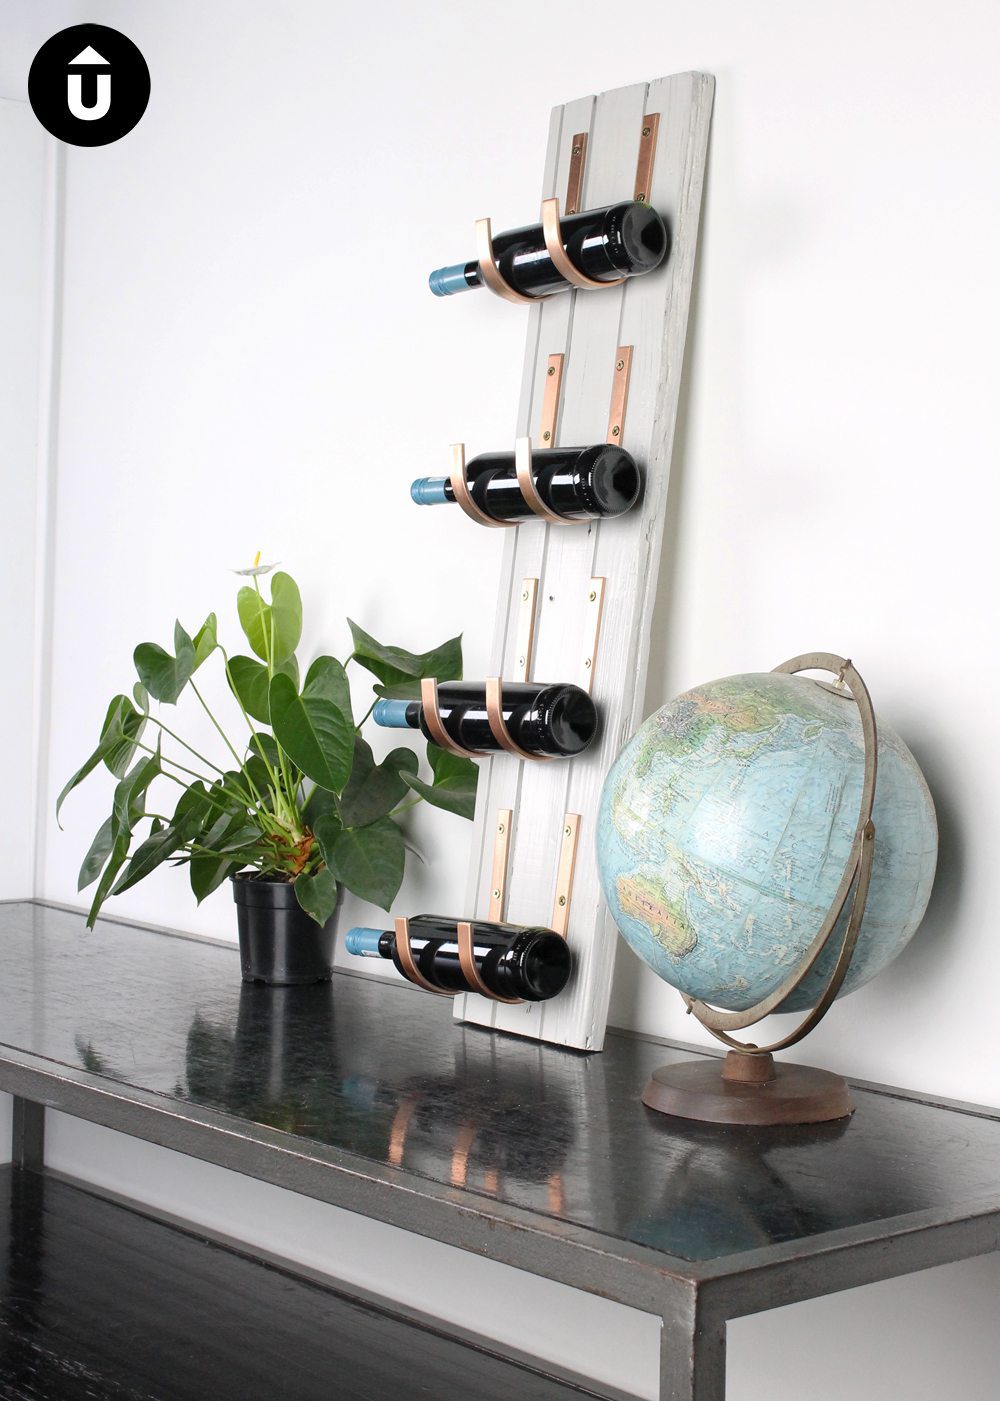 DIY wine rack